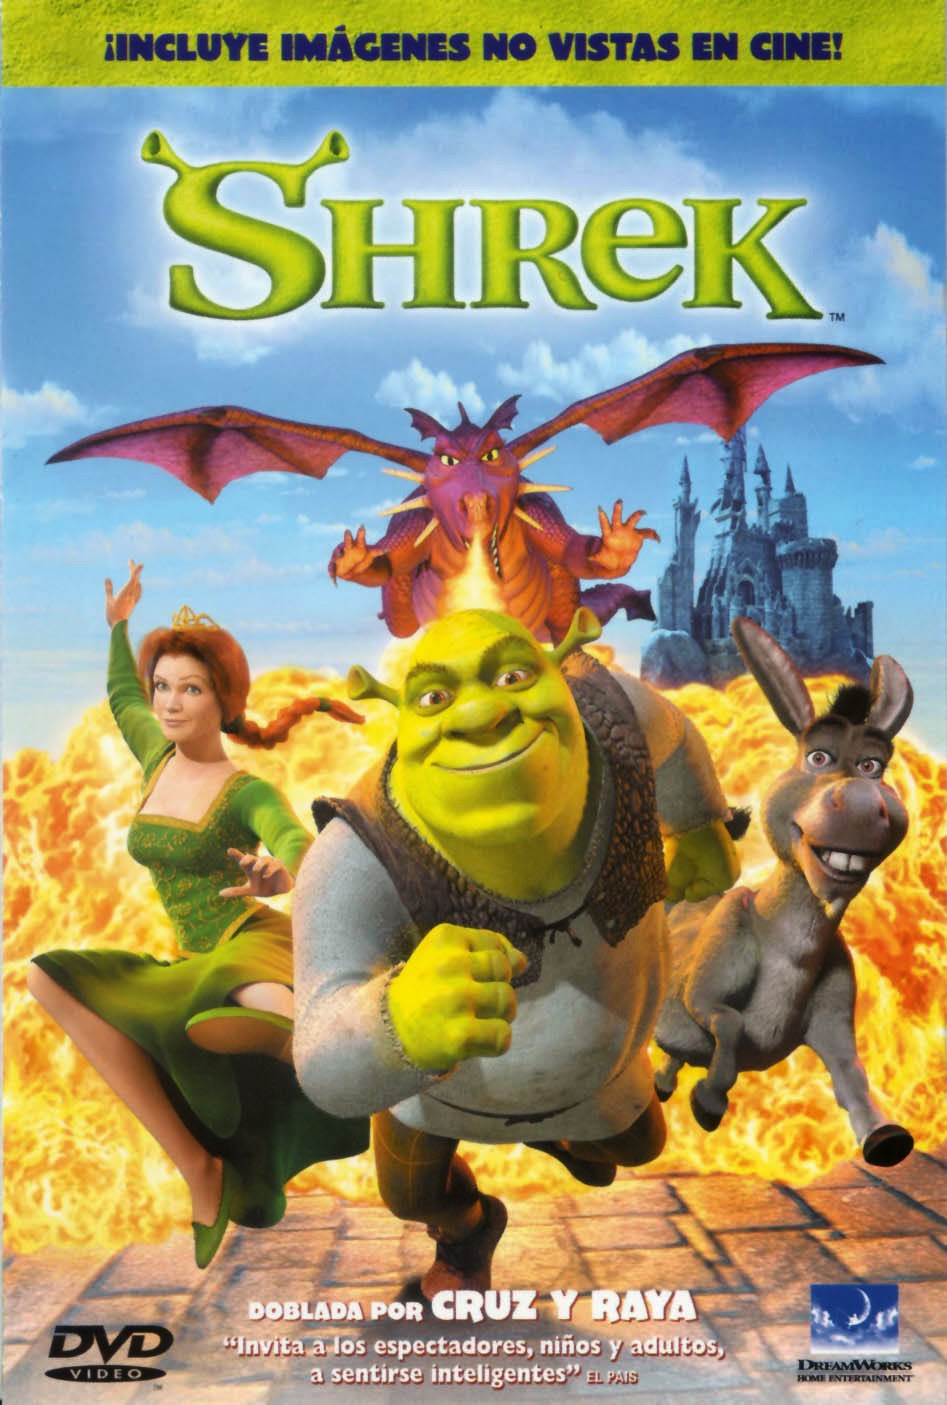 Watch Shrek (2001) Online For Free Full Movie English Stream